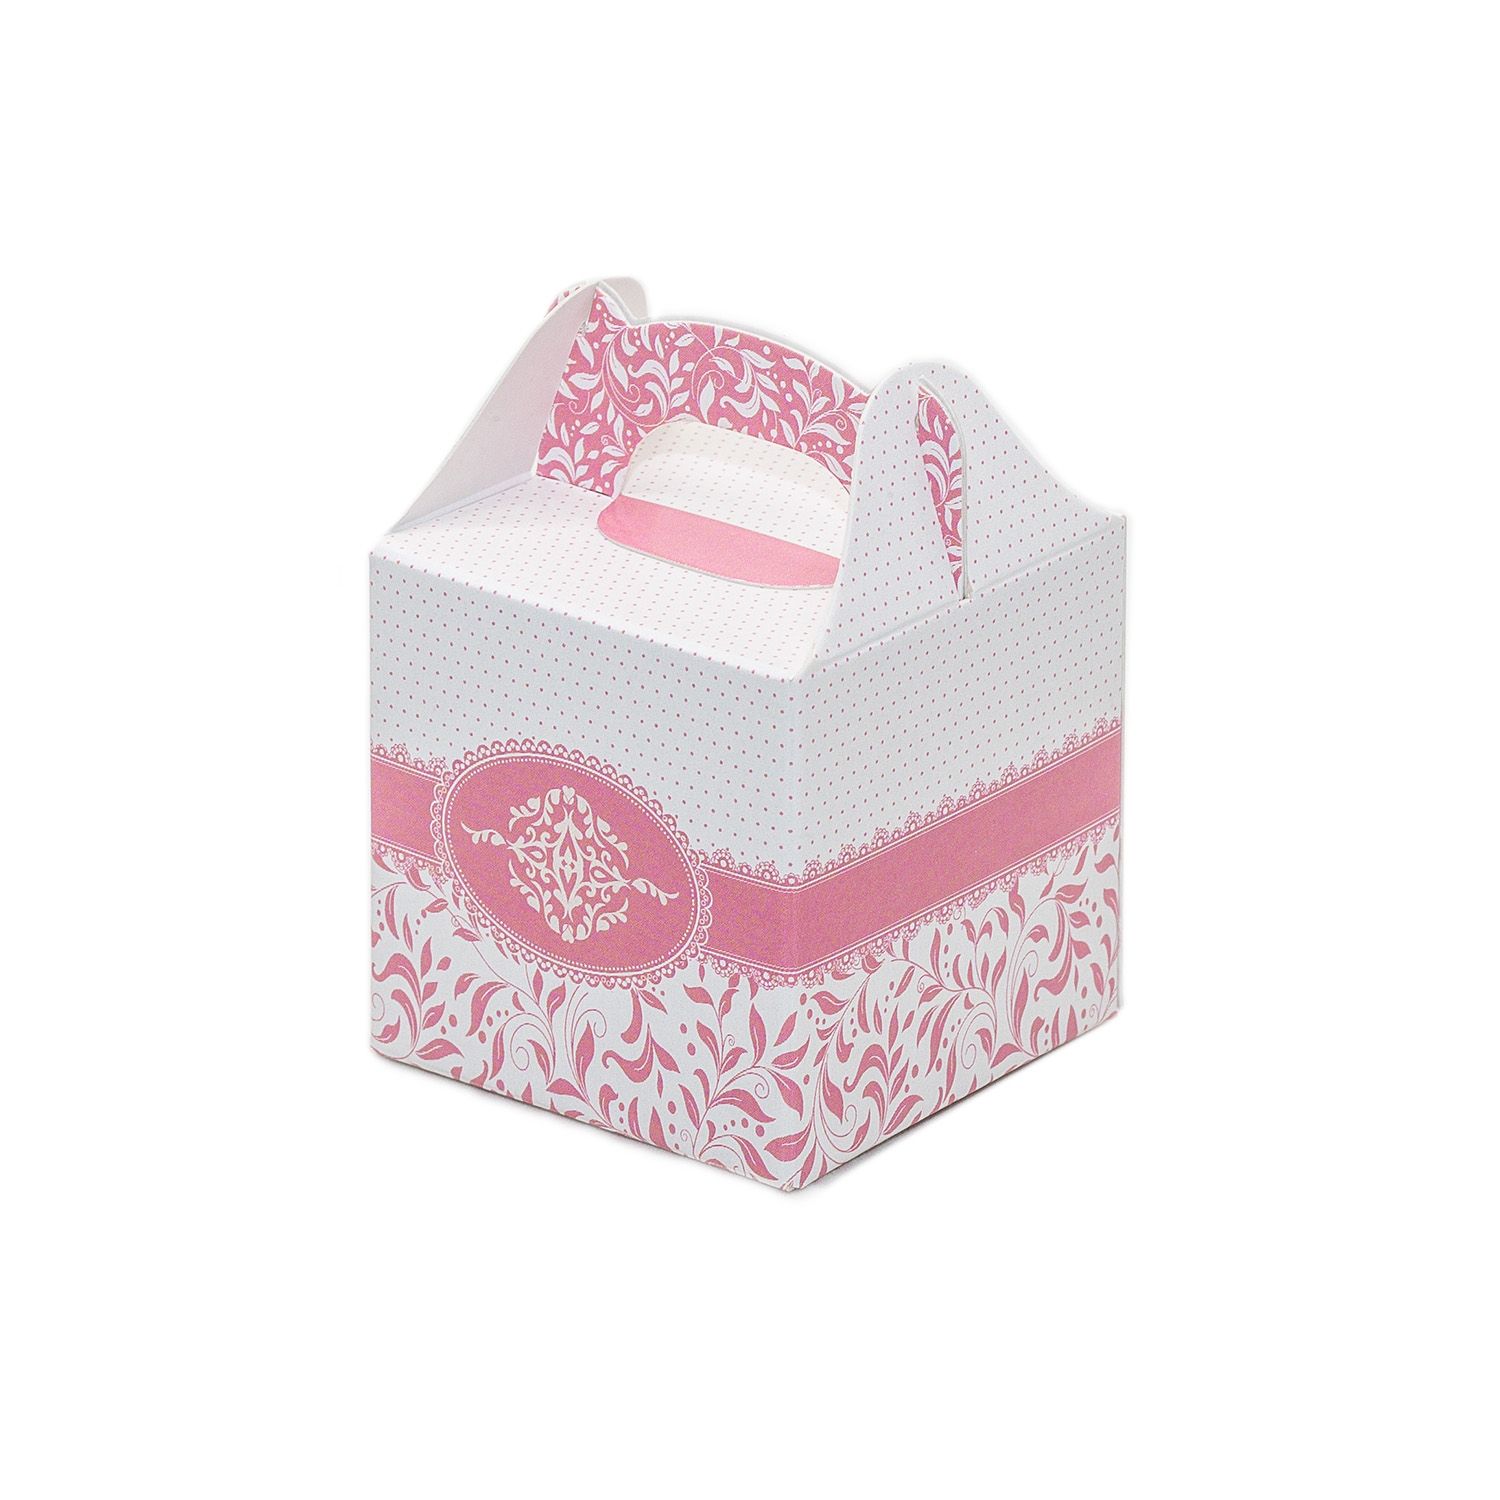 Svatební krabička na mandličky - K14-1003-01